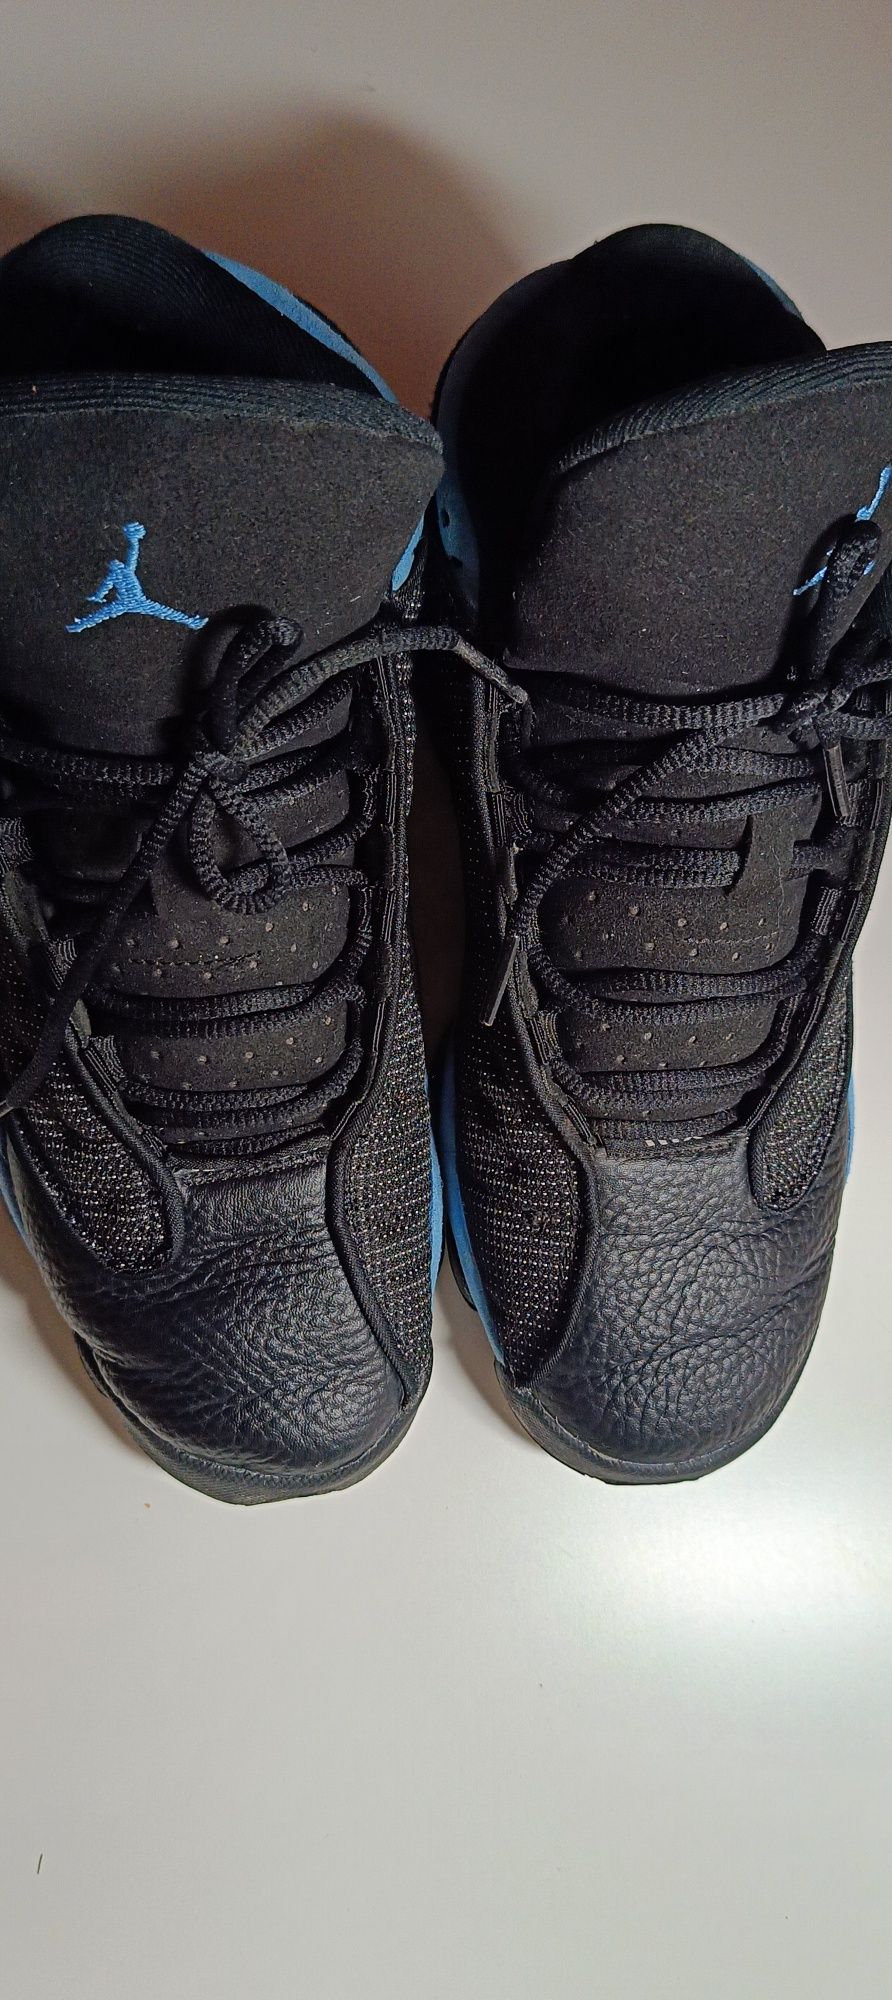 93.Buty Nike Air Jordan 13 Retro Black Blue-White